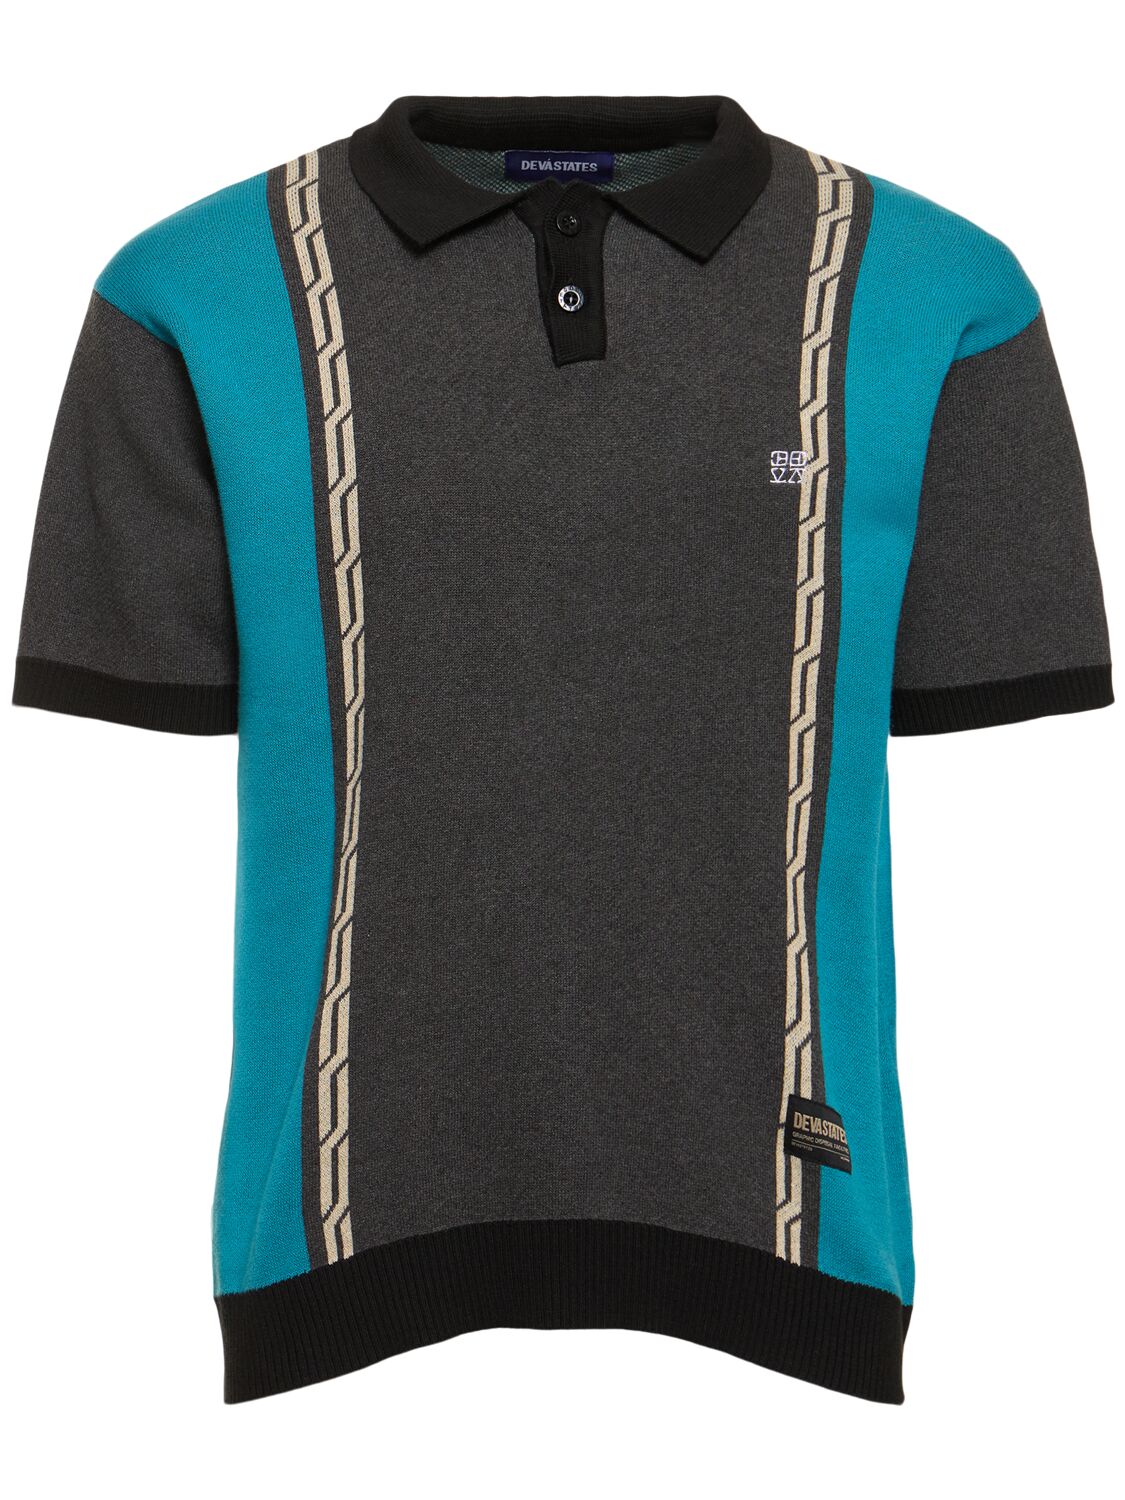 Deva States Chain Jacquard Knit S/s Polo Shirt In Black,multi